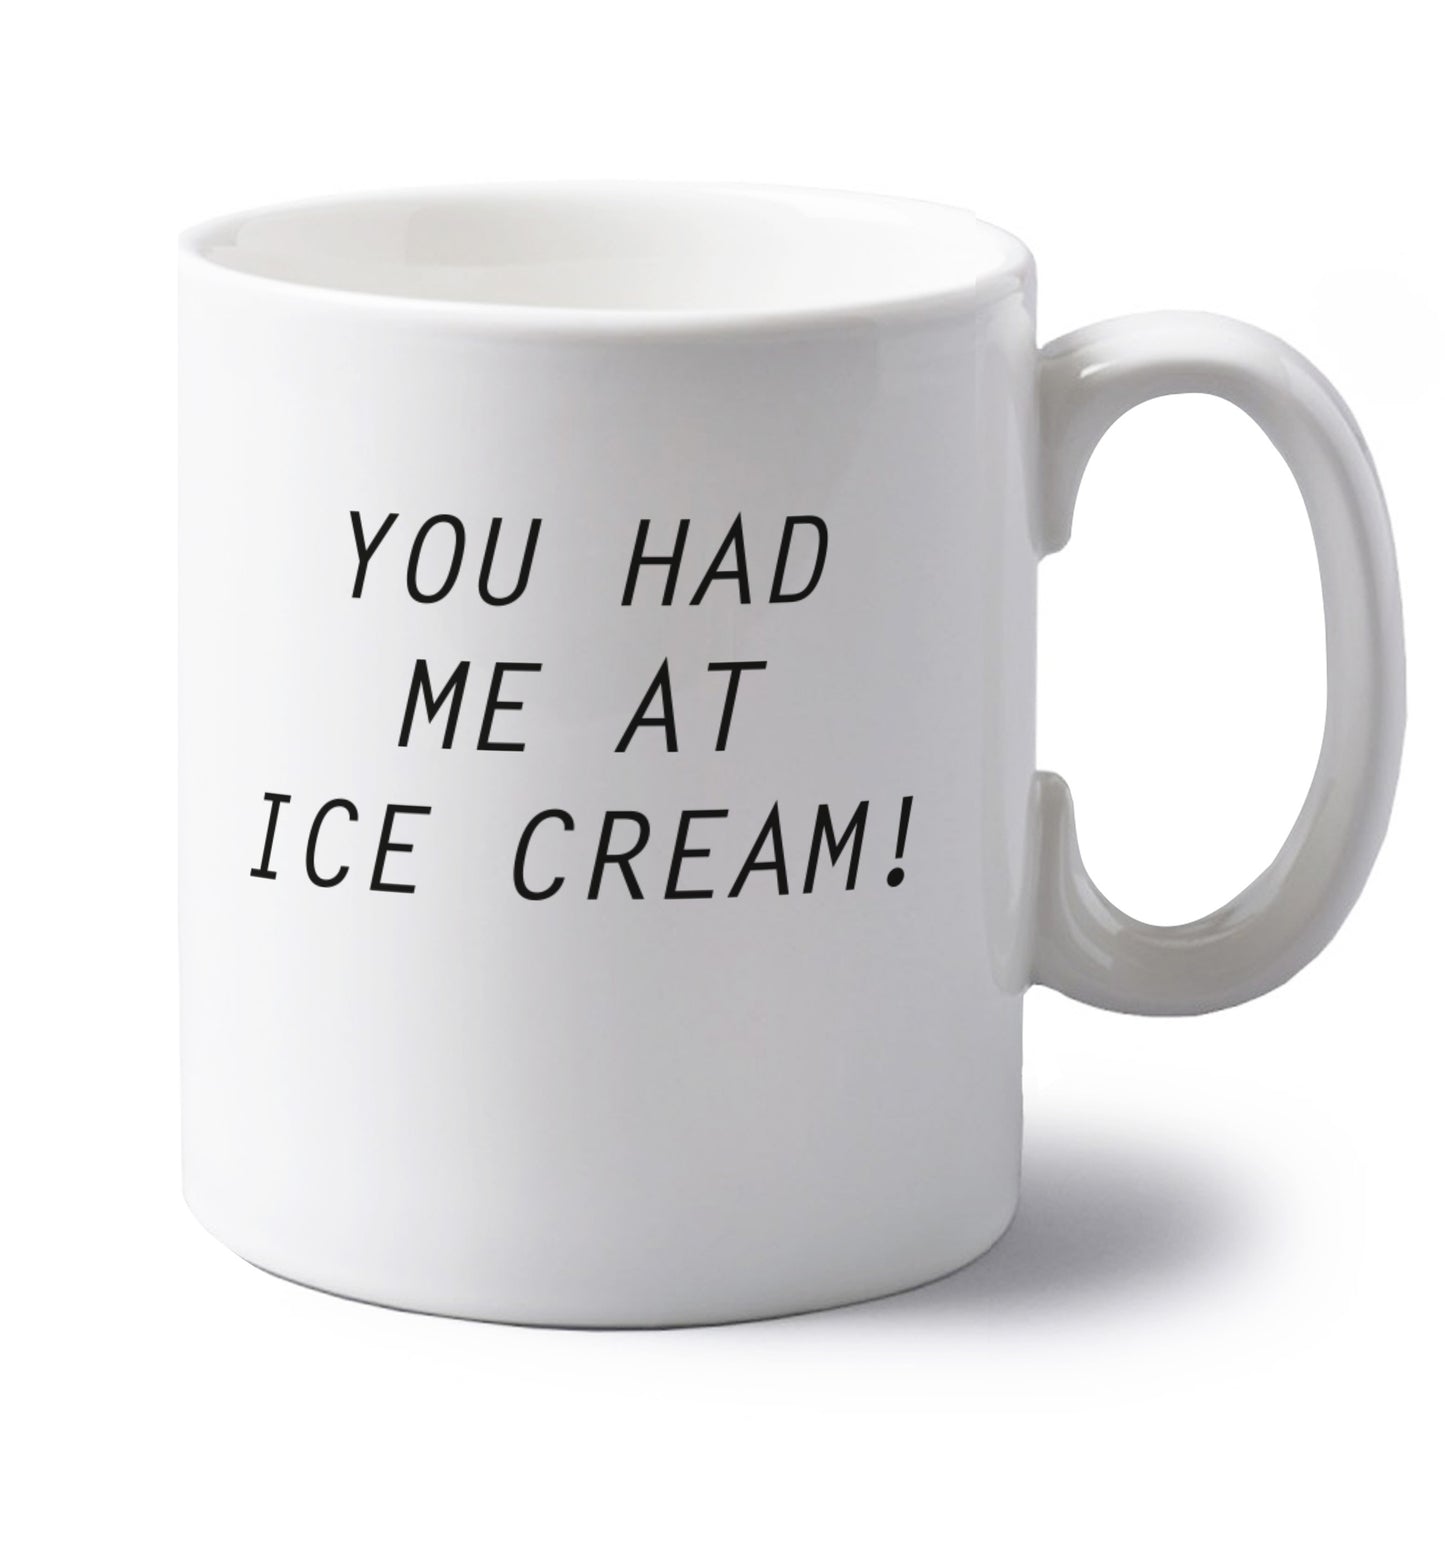 You had me at ice cream left handed white ceramic mug 